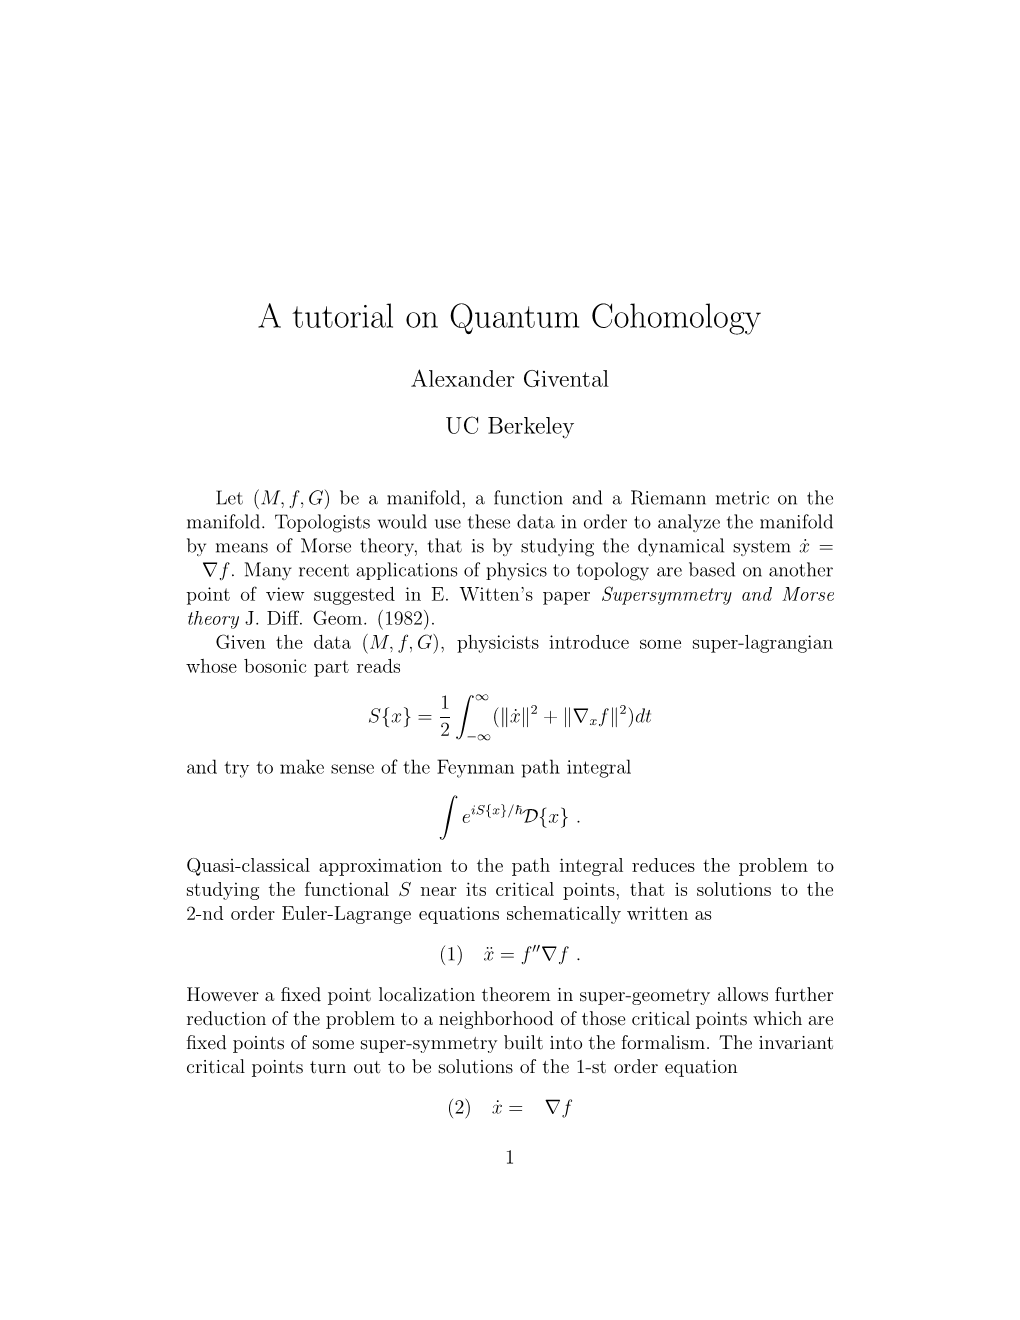 A Tutorial on Quantum Cohomology